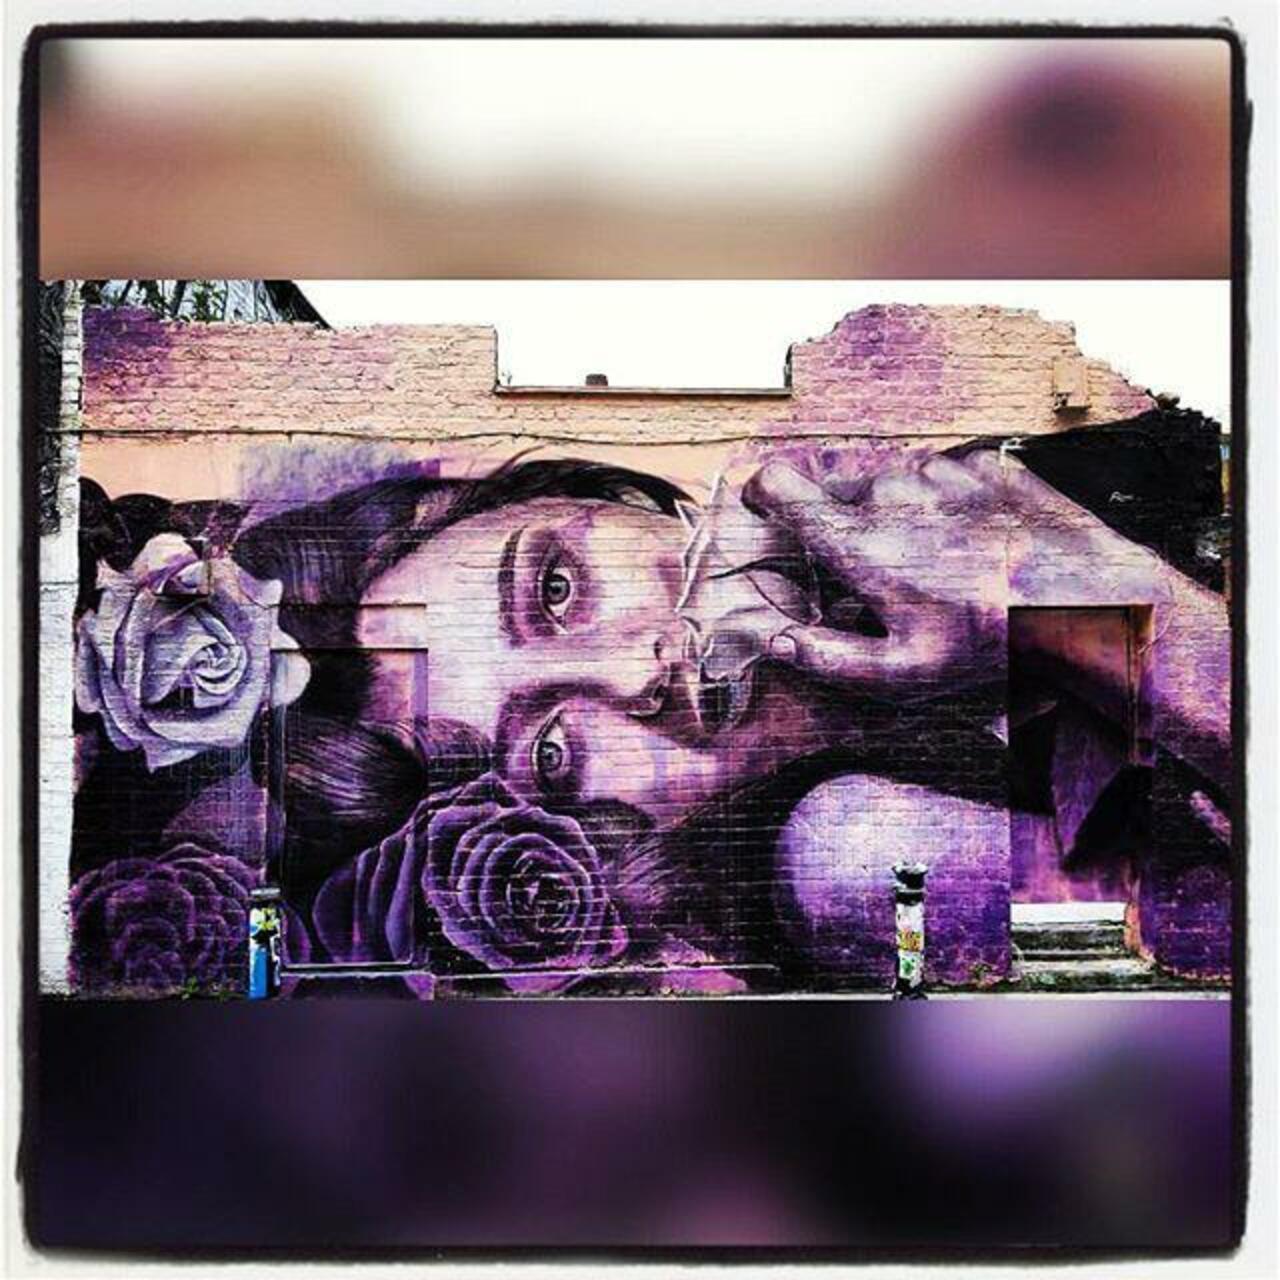 #streetart #london #rone #girl #purple #rose #england #londonstreetart #street #art #streetartlondon #graffiti http://t.co/G26cNg2KxE